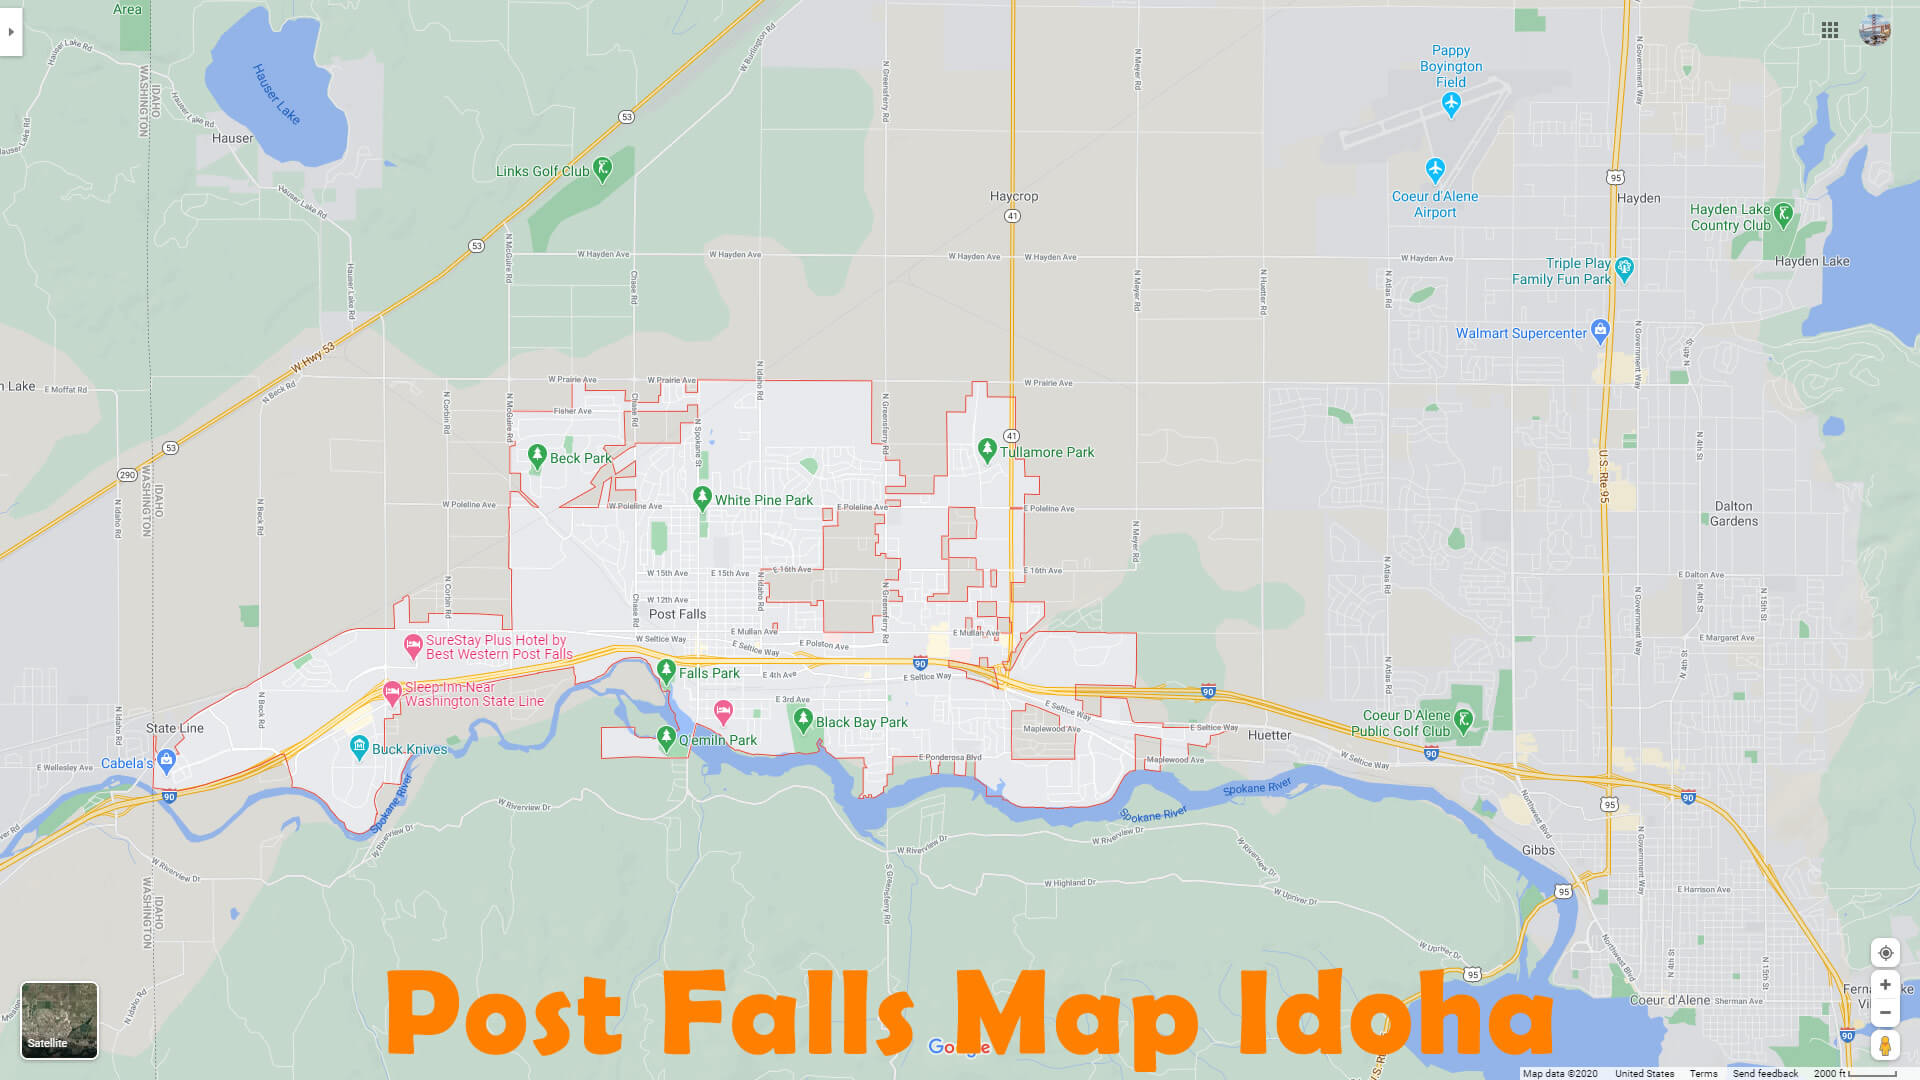 Post Falls Map Idoha